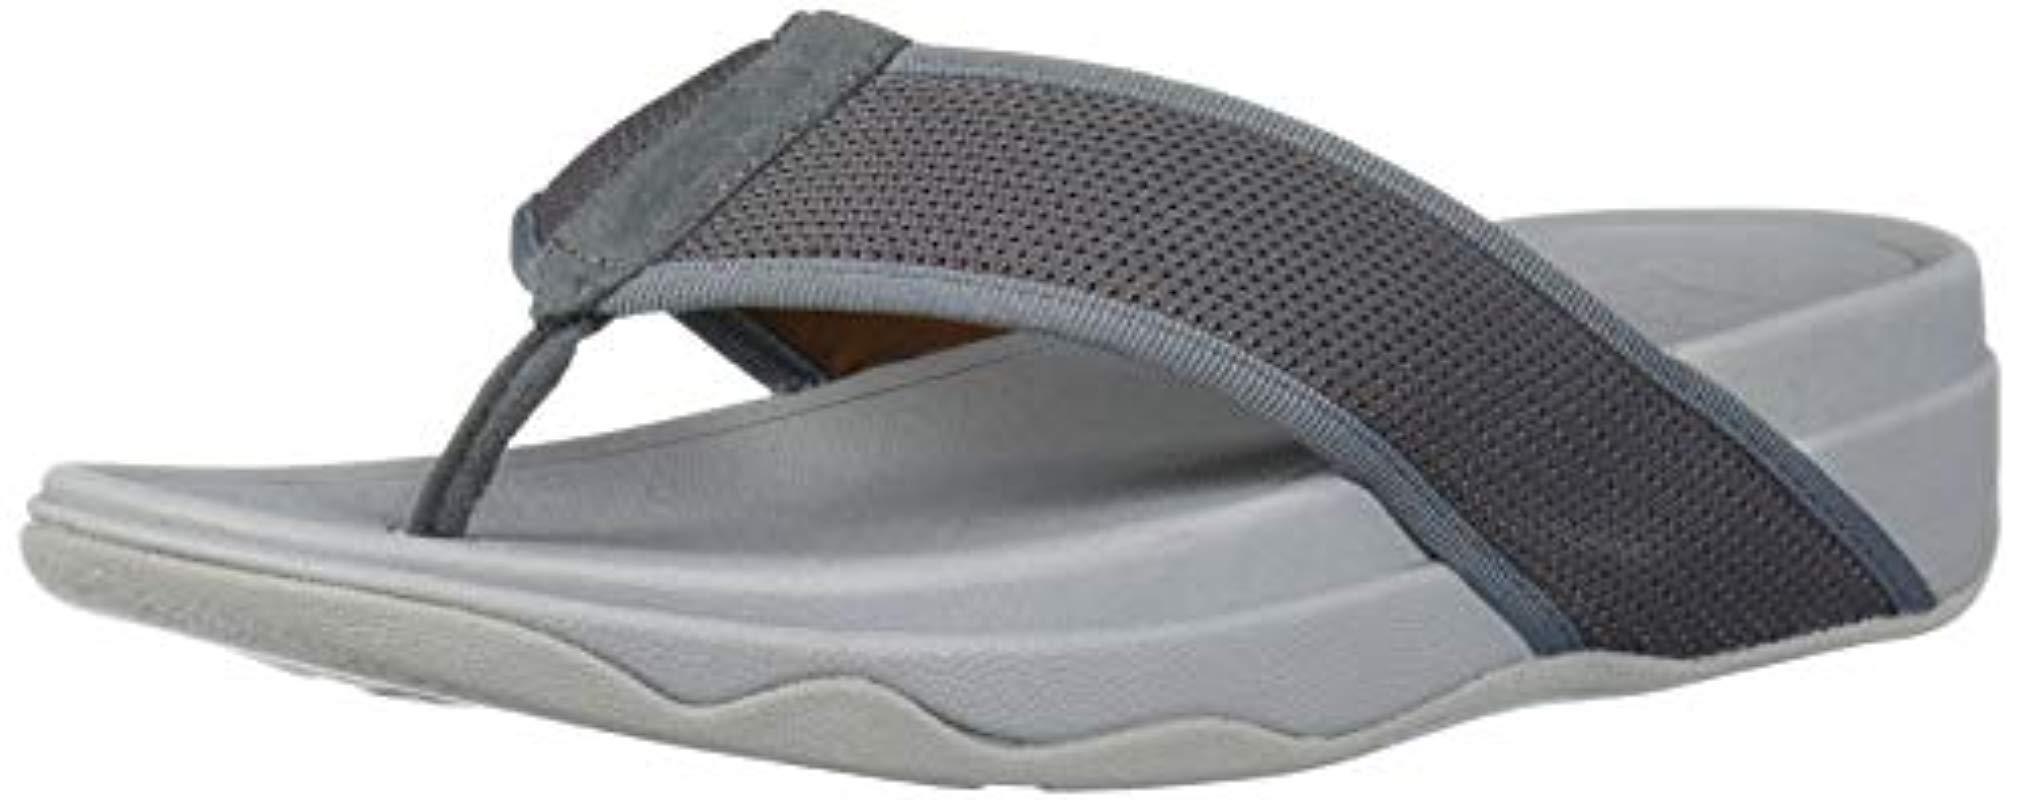 grey fit flops